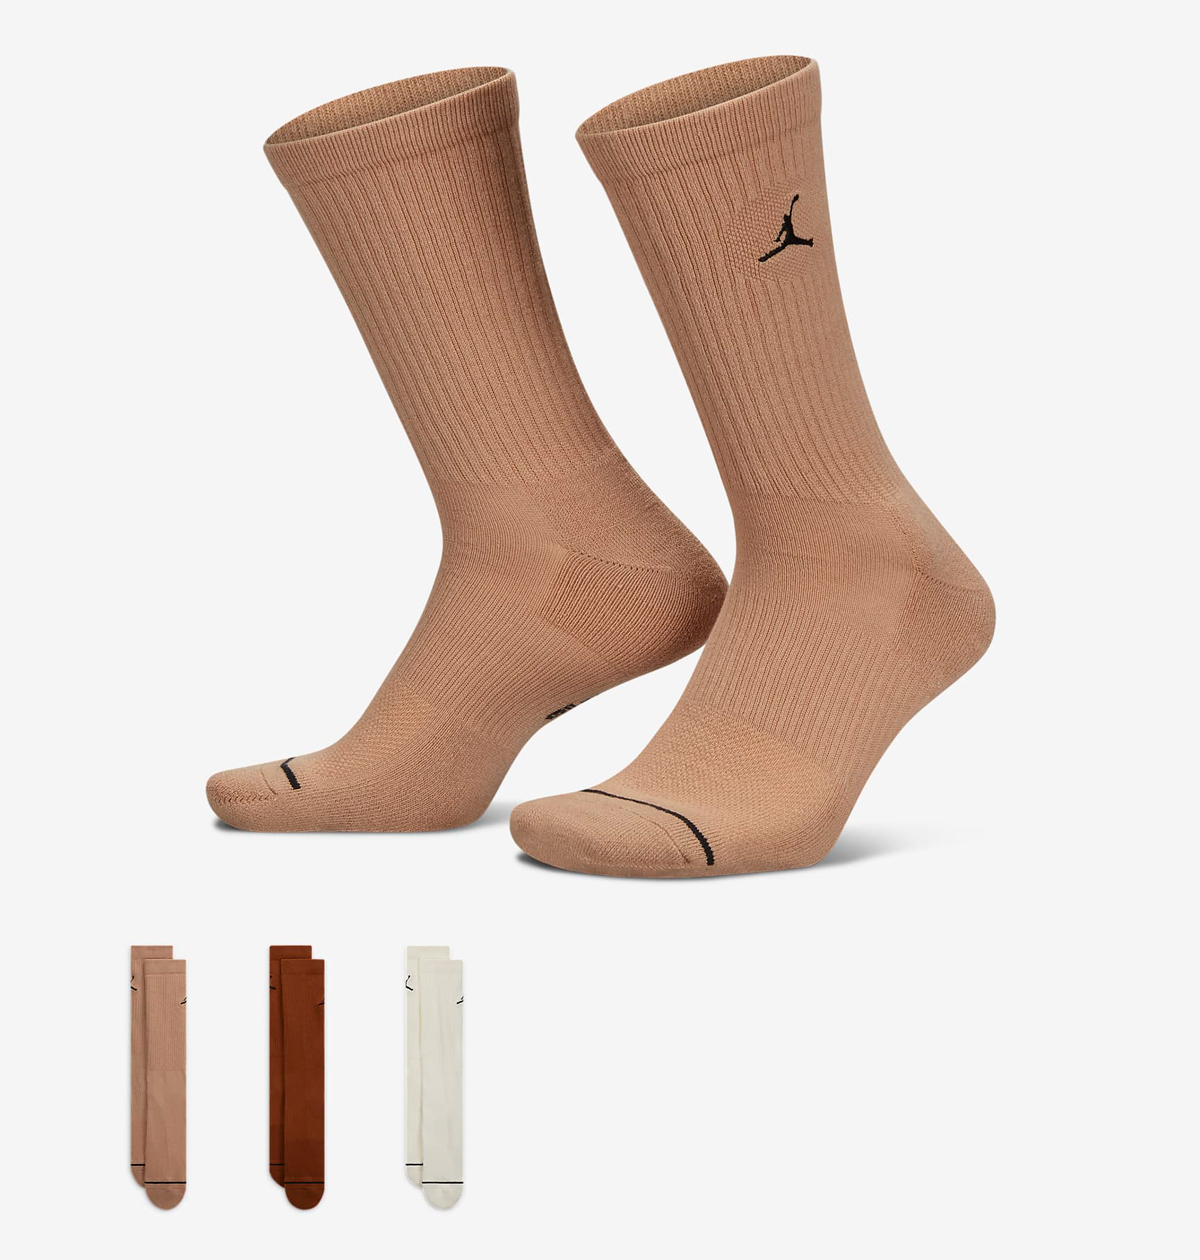 Air-Jordan-3-Palomino-Socks-1